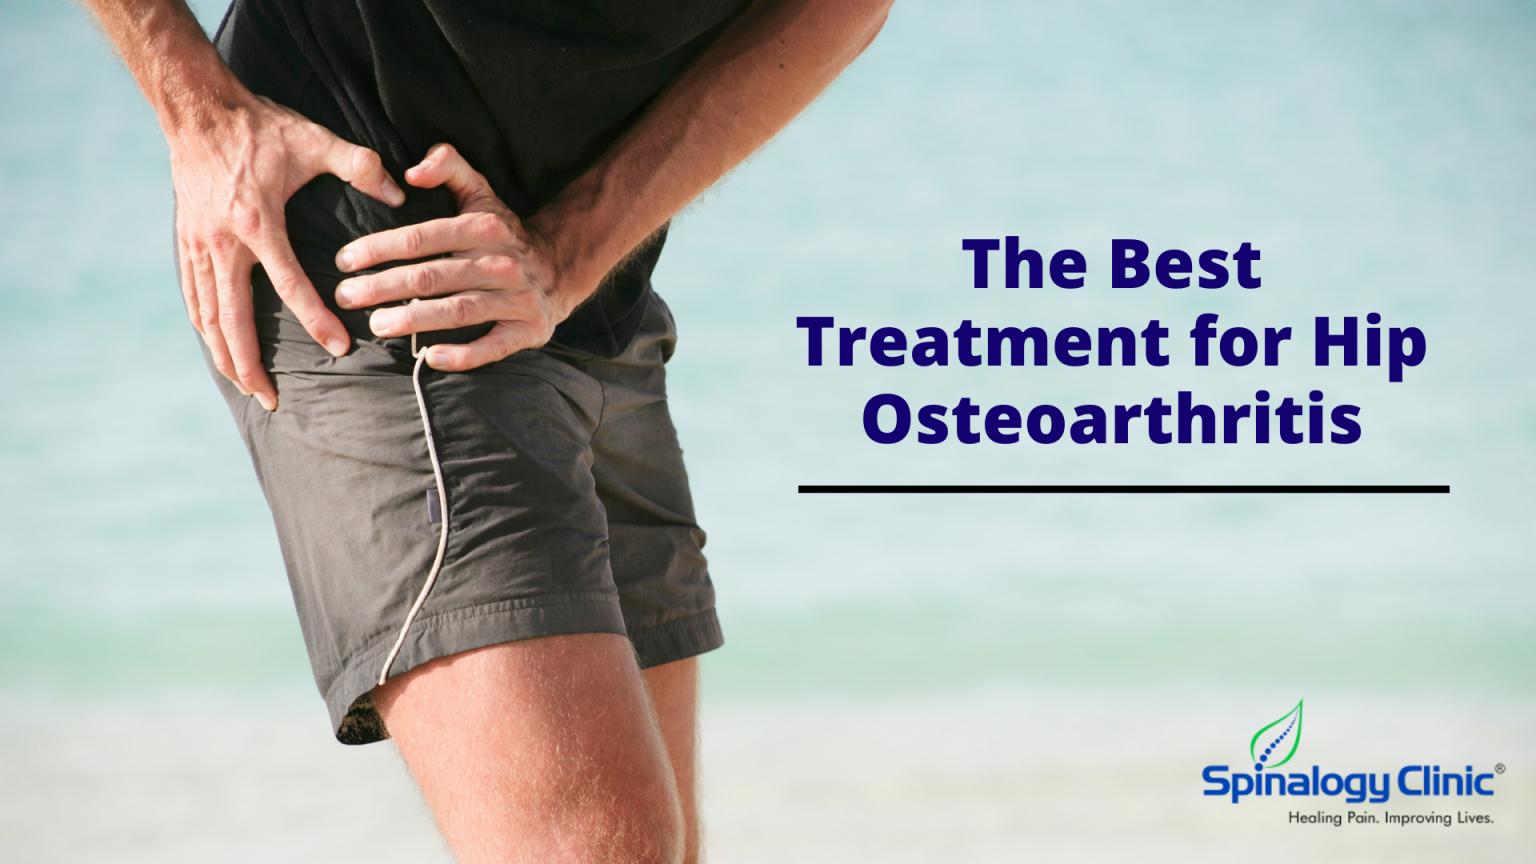 The Best Treatment for Hip Osteoarthritis